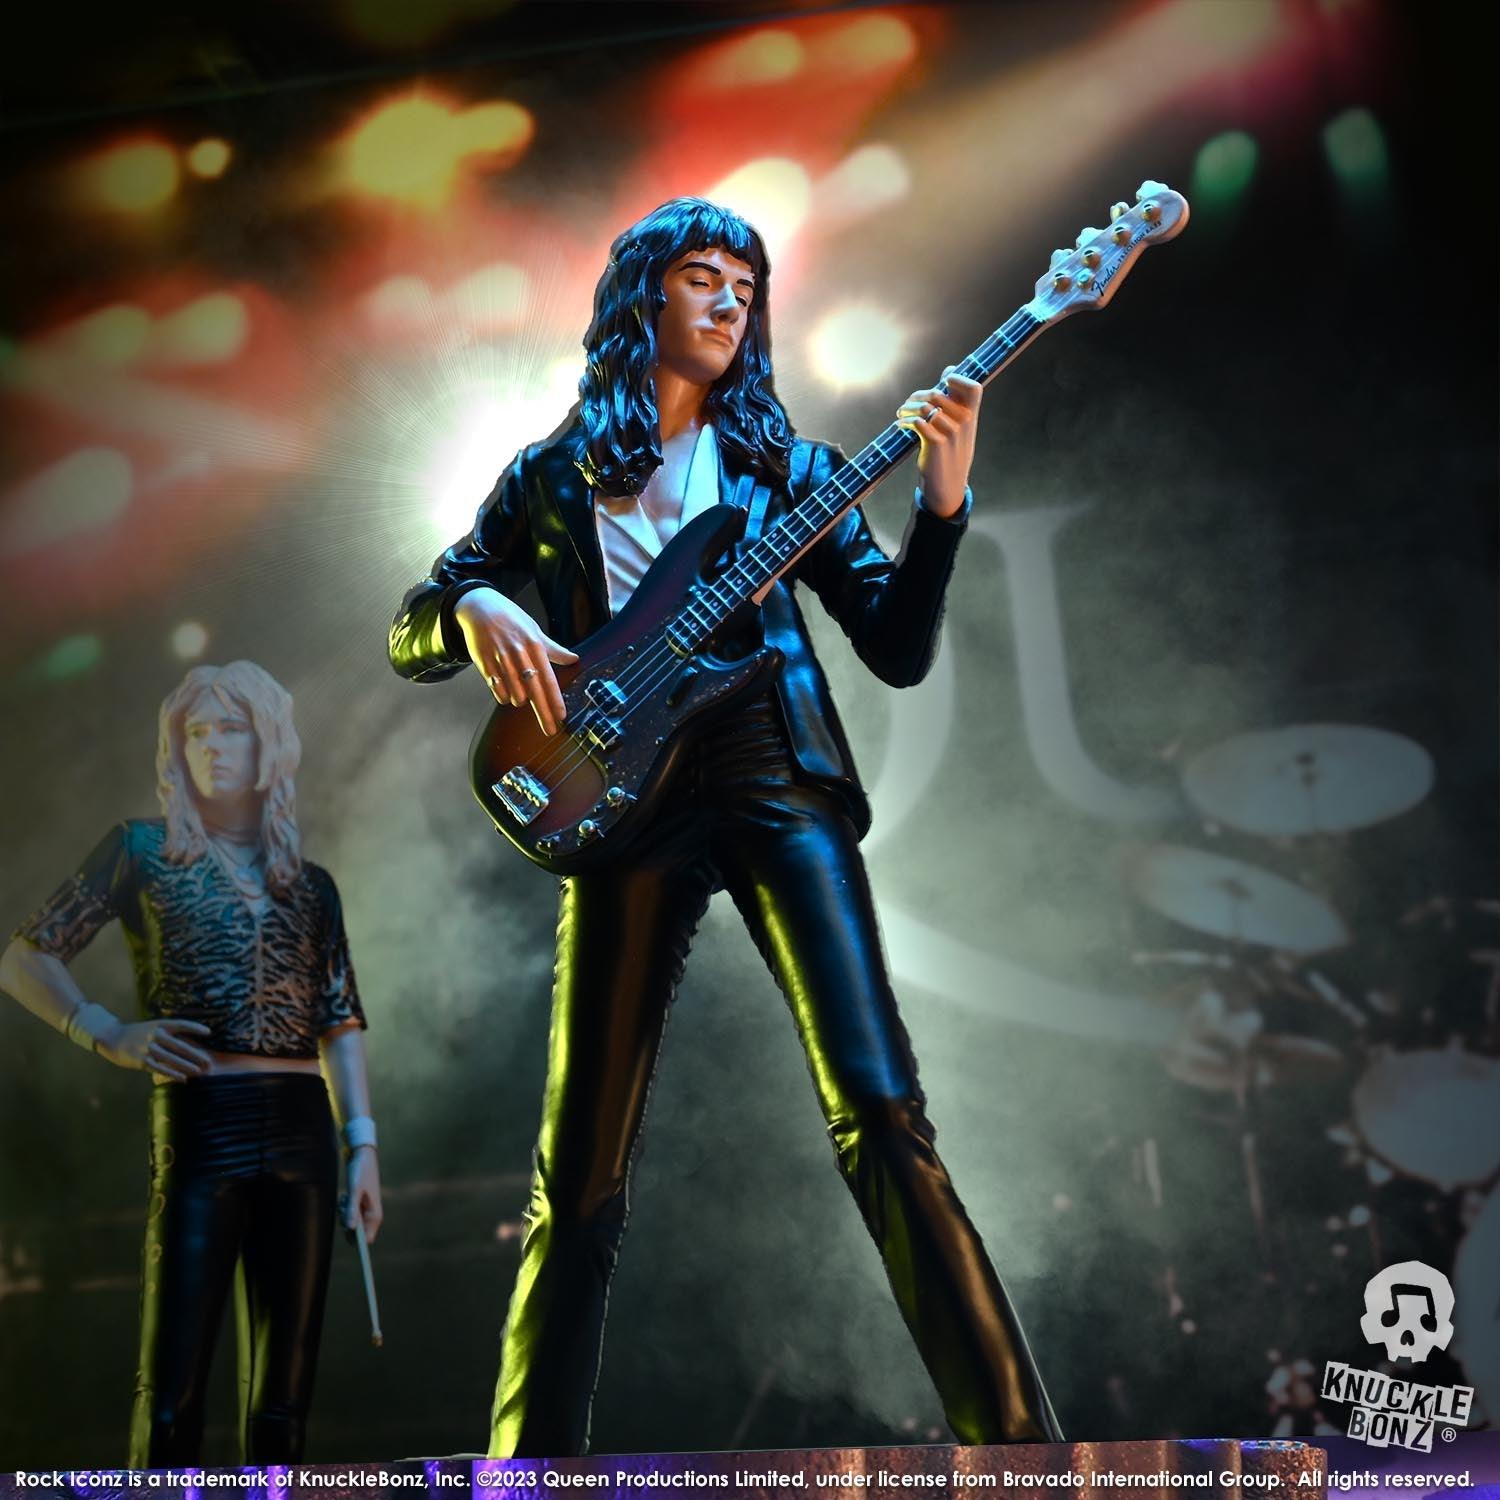 Queen 2 - Rock Iconz Statues [Set of 4] Rock Iconz Statue Sets by KnuckleBonz | Titan Pop Culture